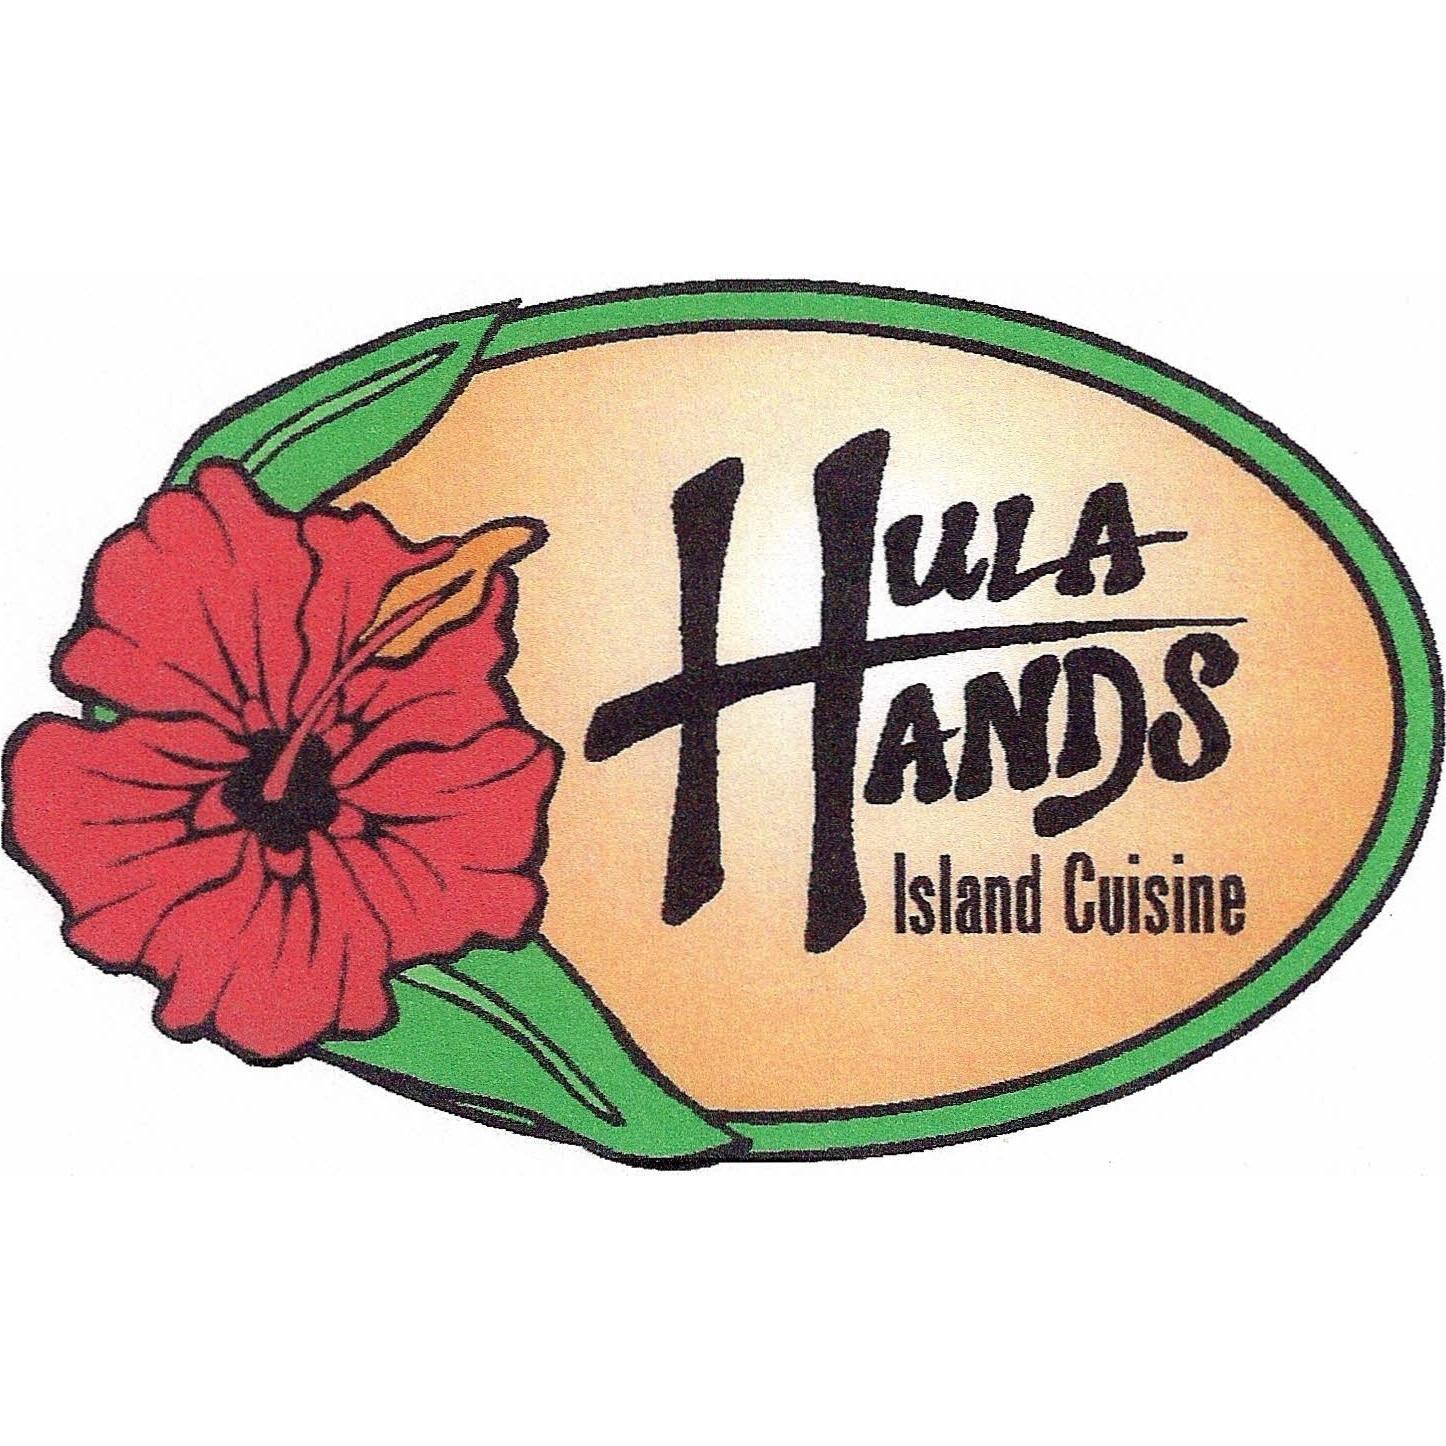 Hula Hands Restaurant 4630 Photo